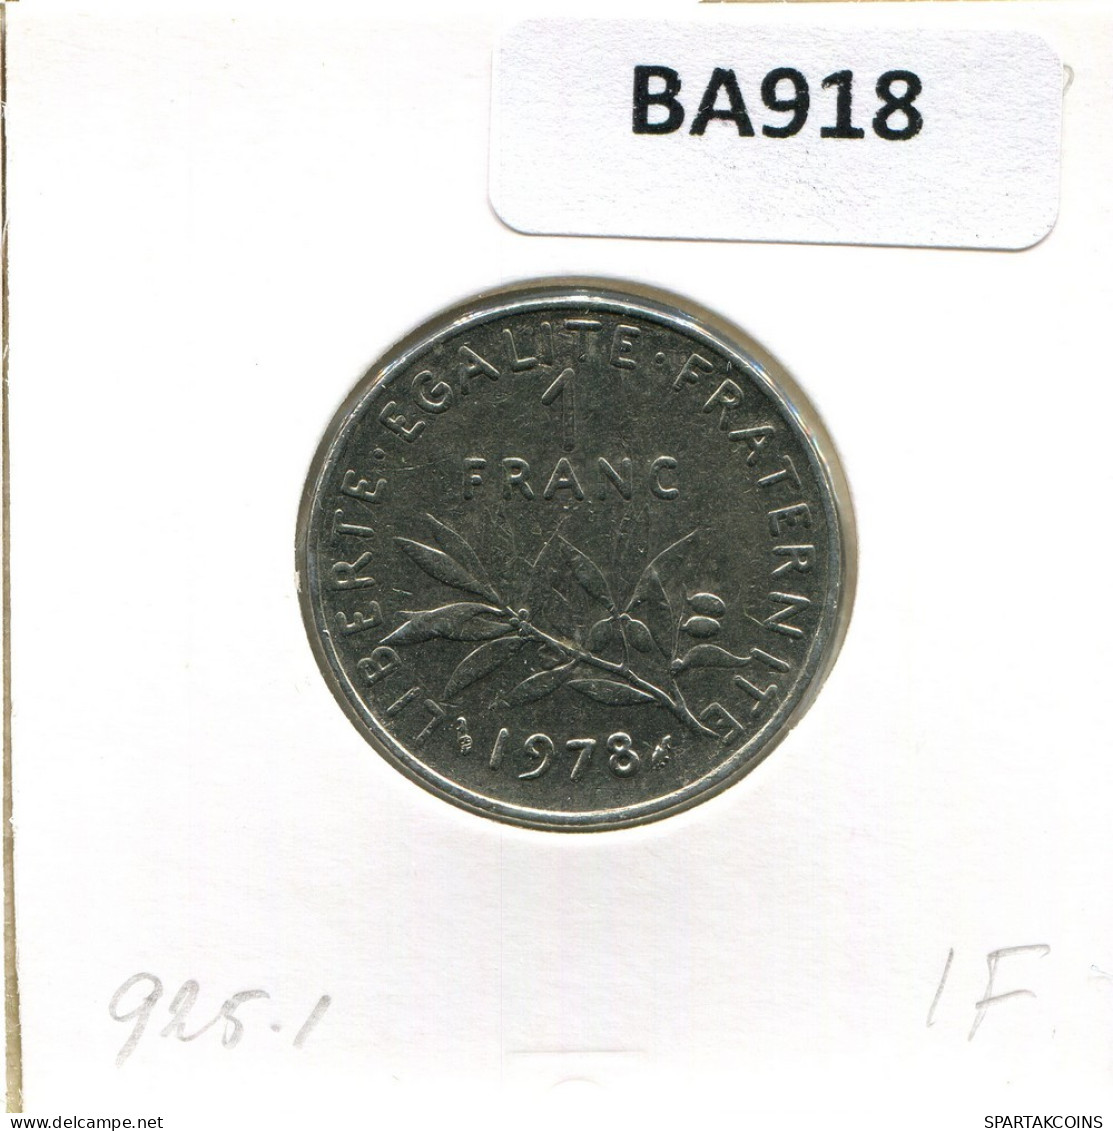 1 FRANC 1978 FRANCE Coin French Coin #BA918.U.A - 1 Franc